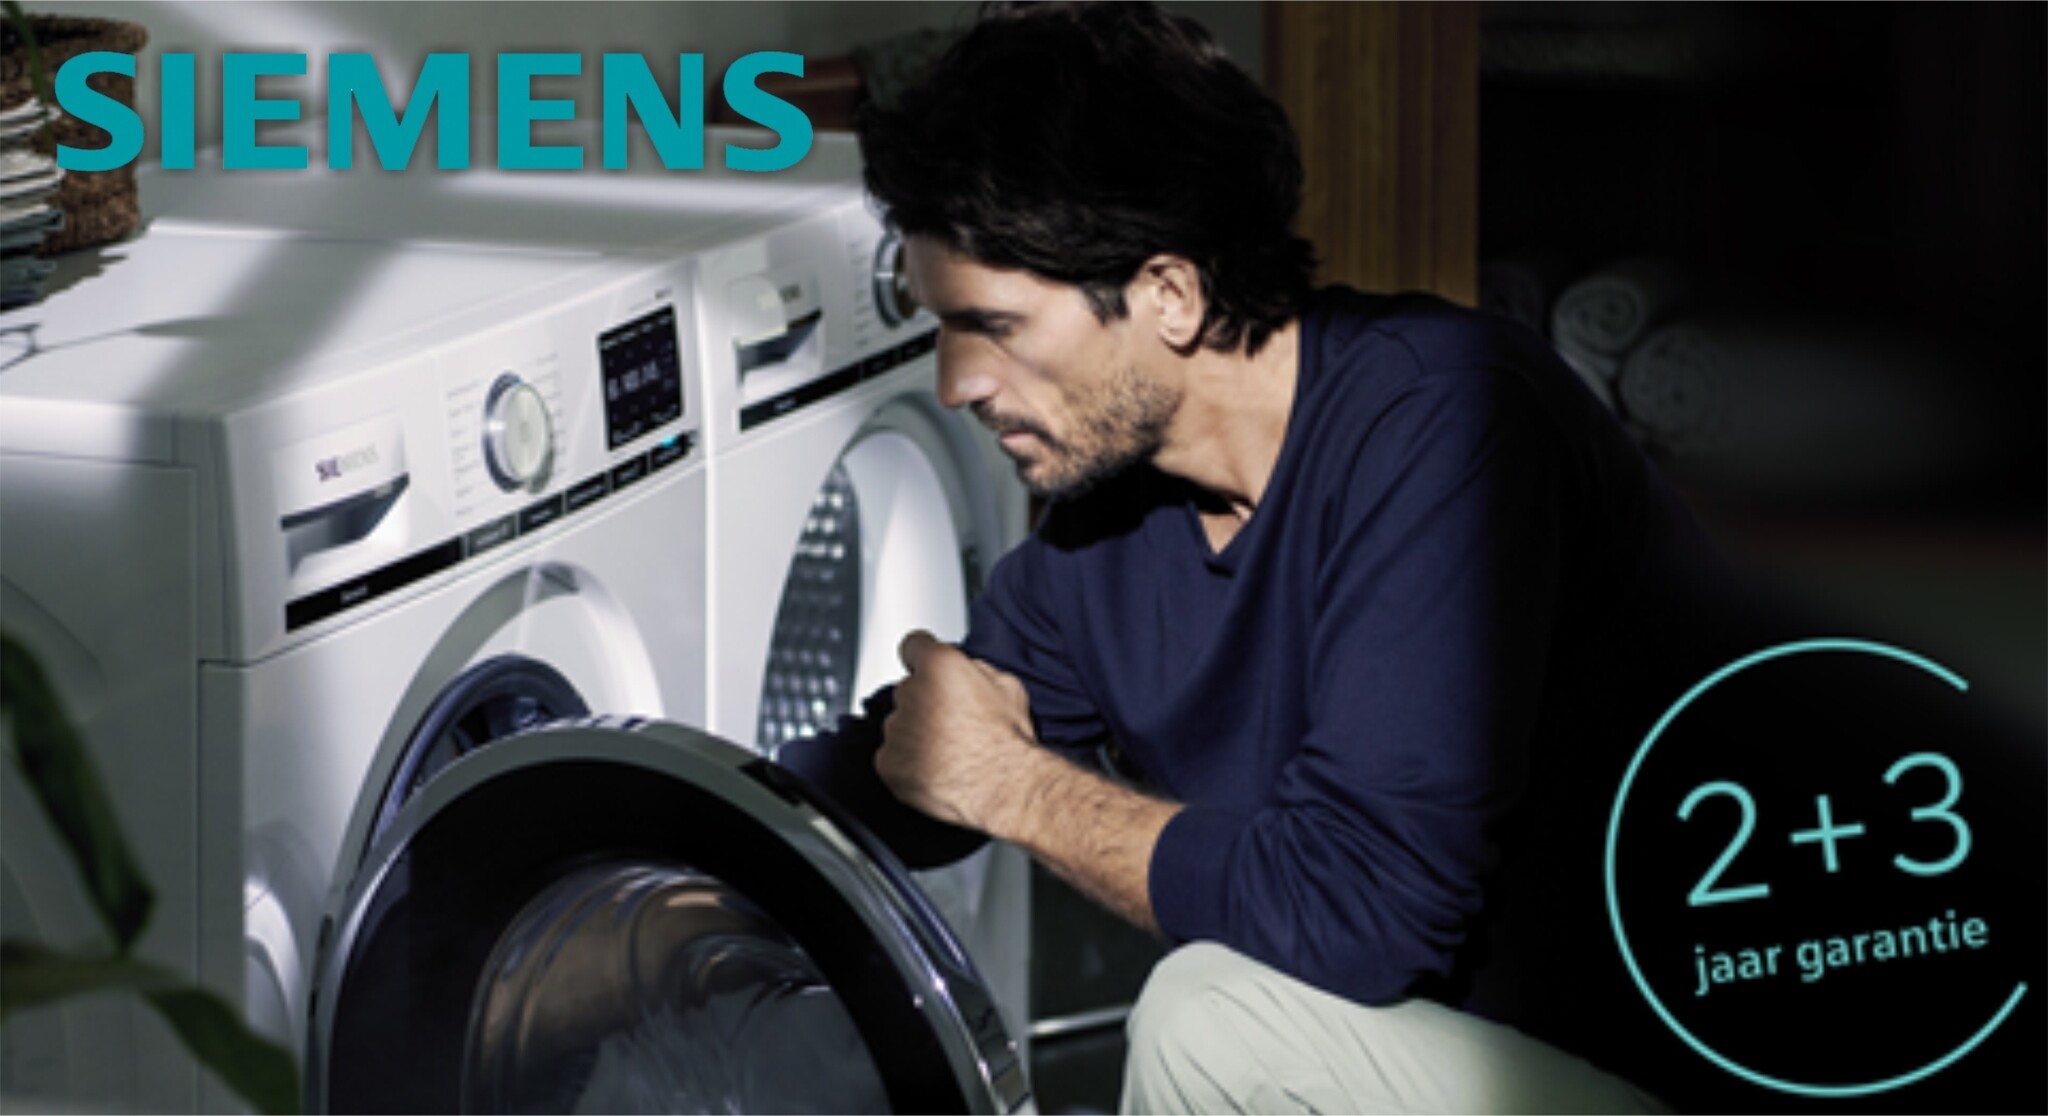 Siemens ExtraKlasse - Nu 2+3 jaar garantie!